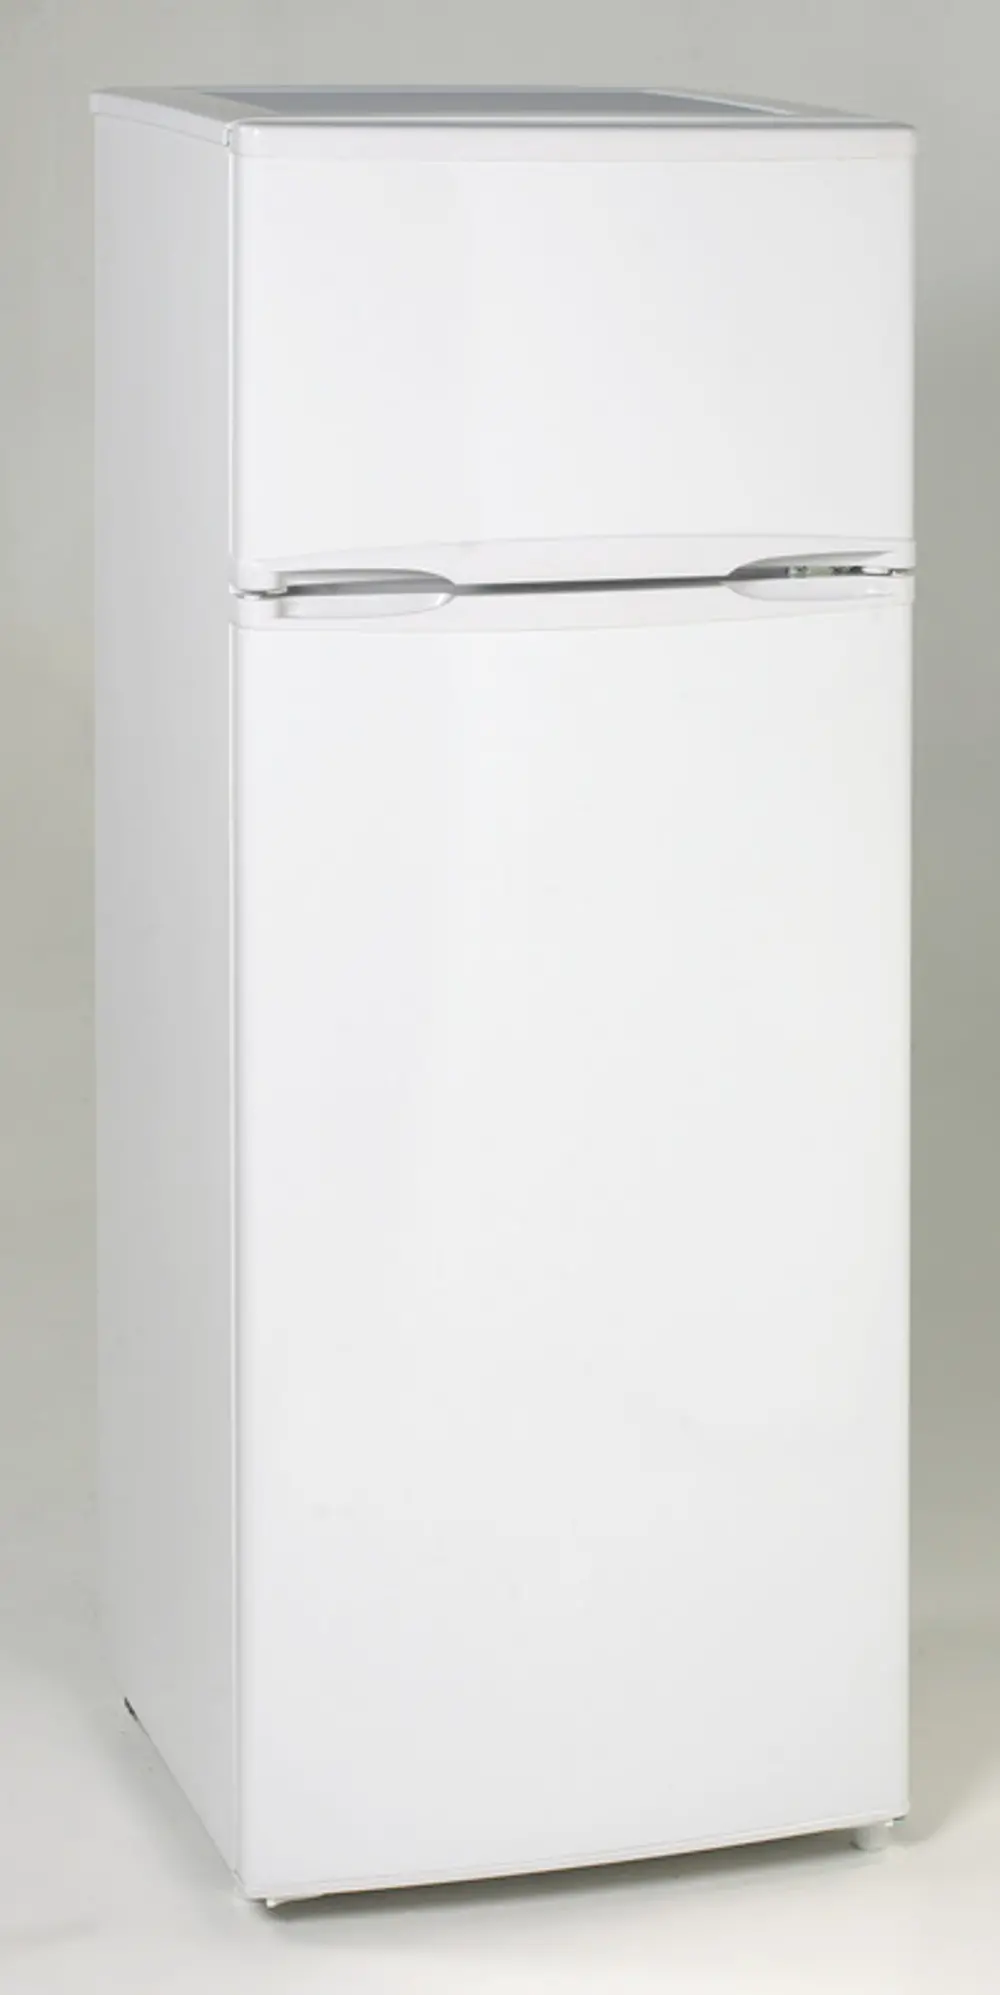 RA7306WT Avanti Two Door Apartment Size Refrigerator - White-1